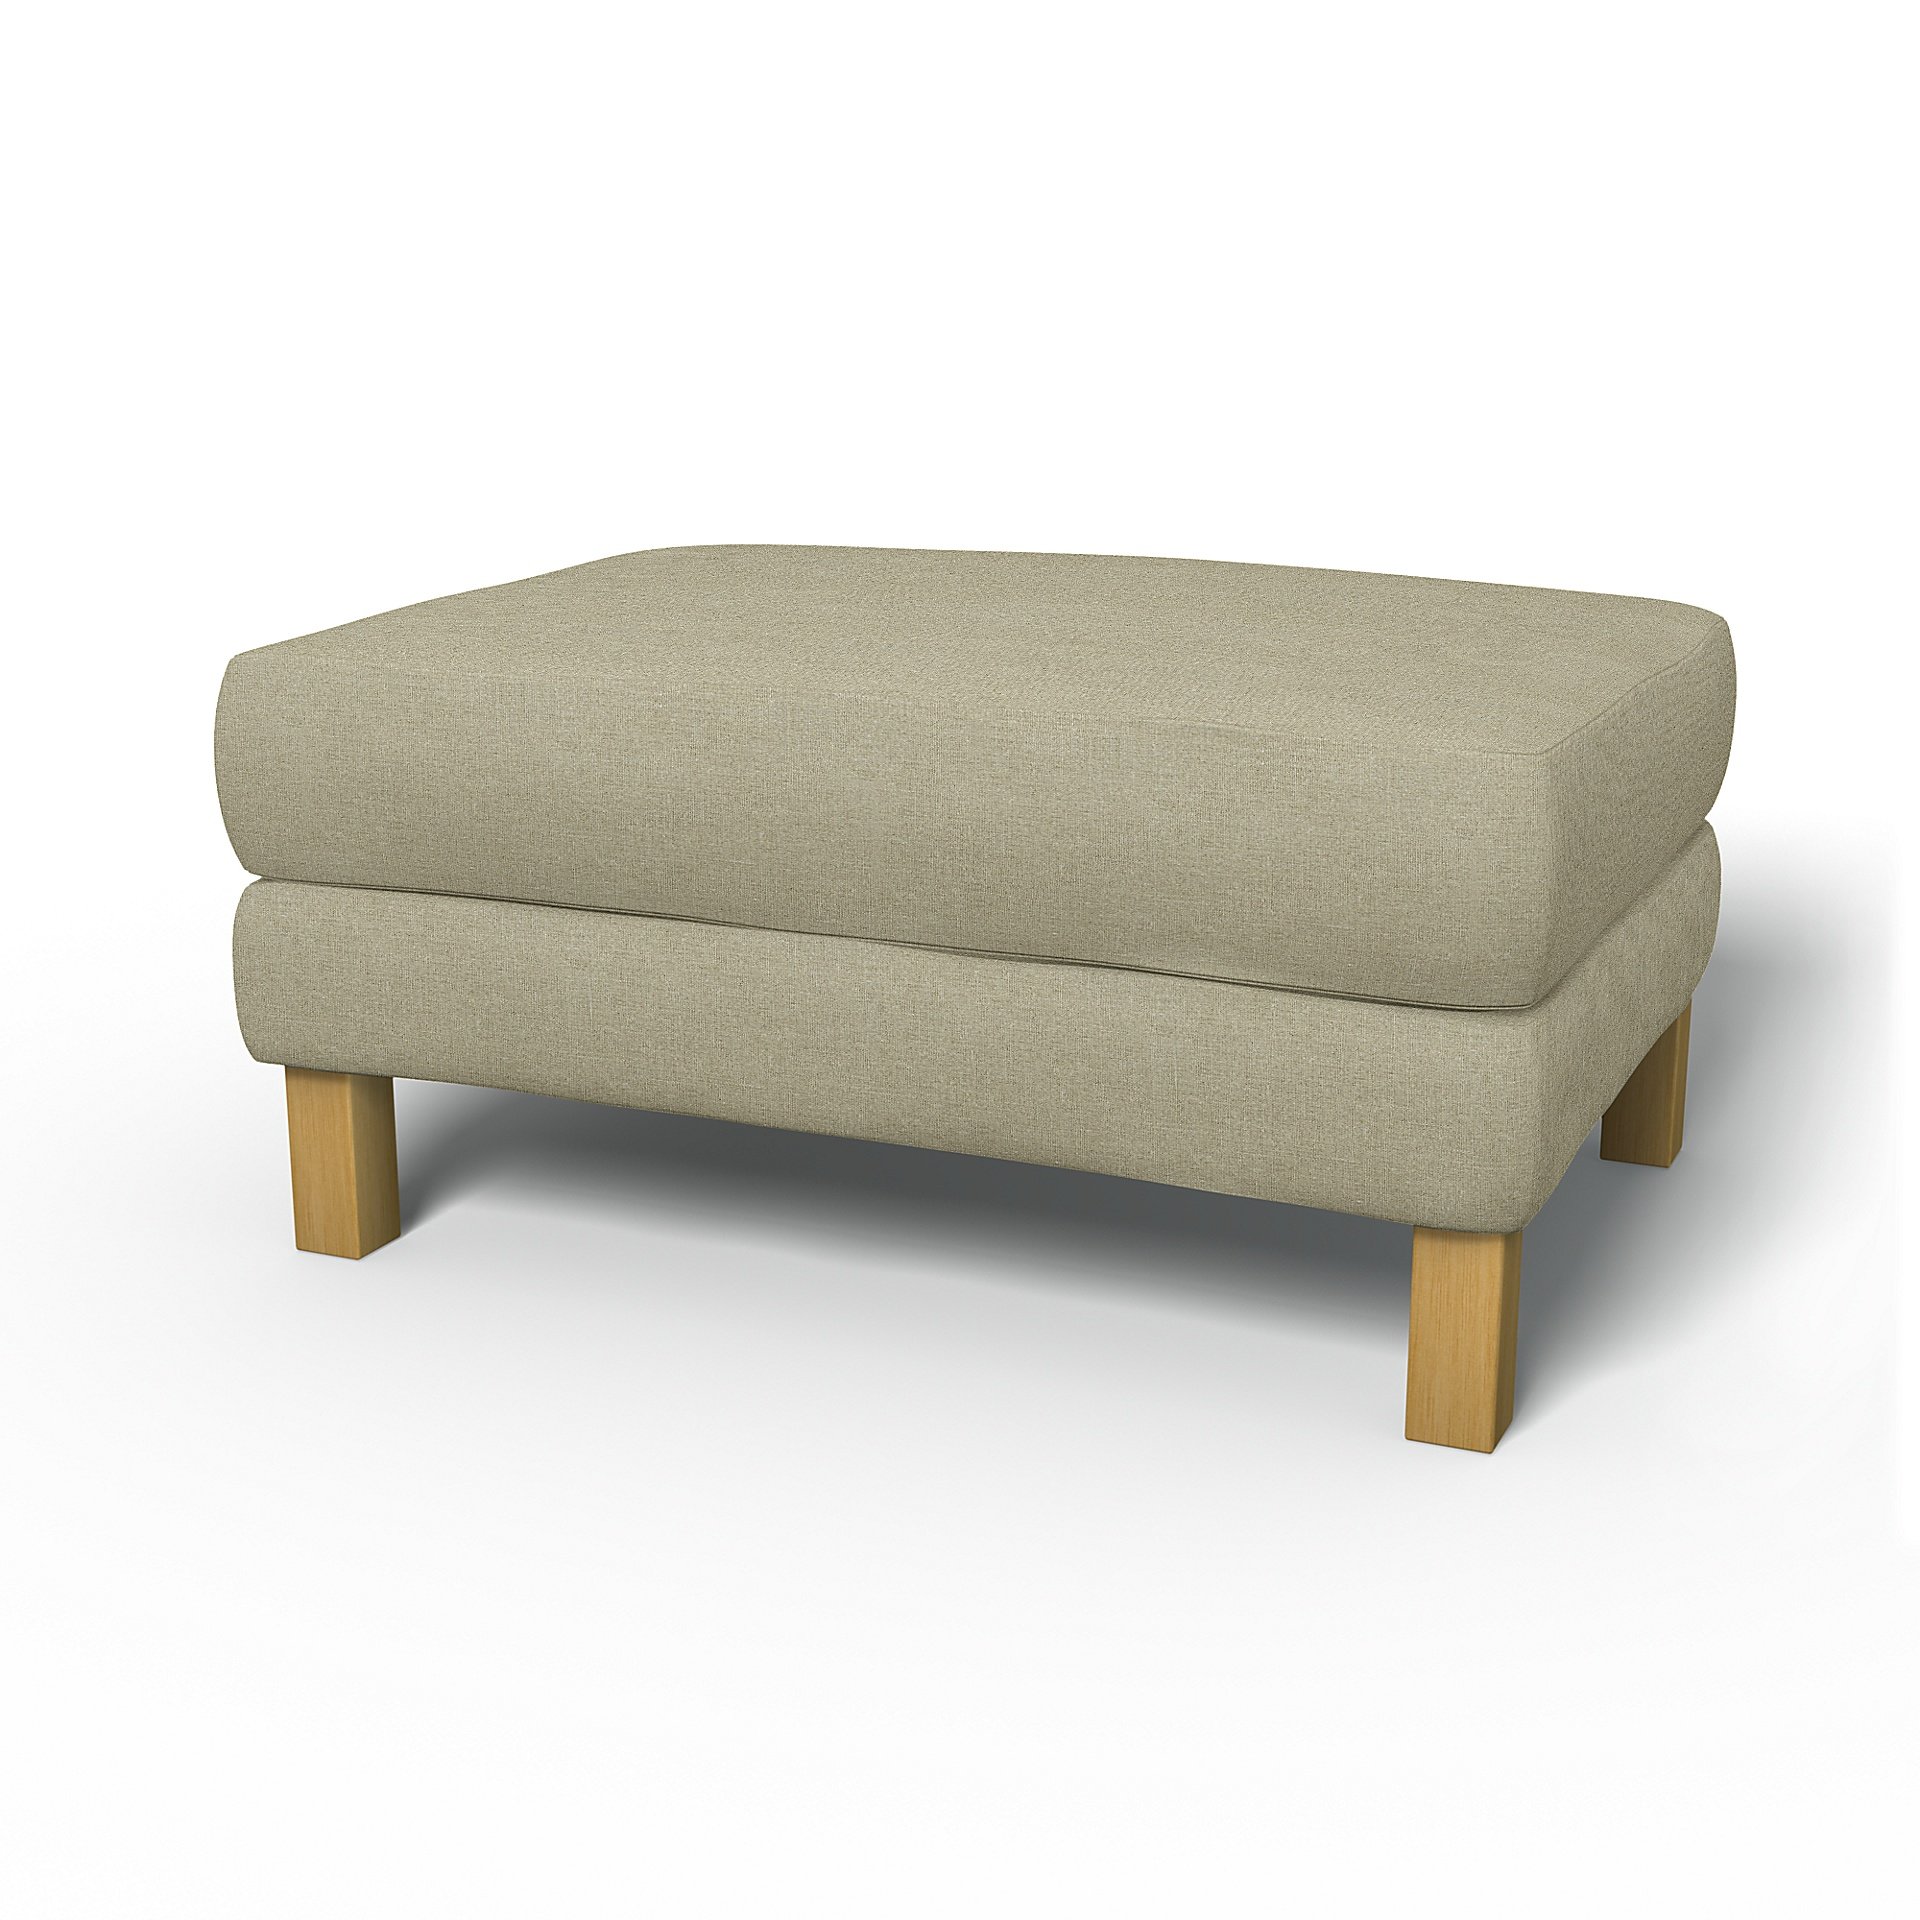 IKEA - Karlstad Footstool Cover, Pebble, Linen - Bemz